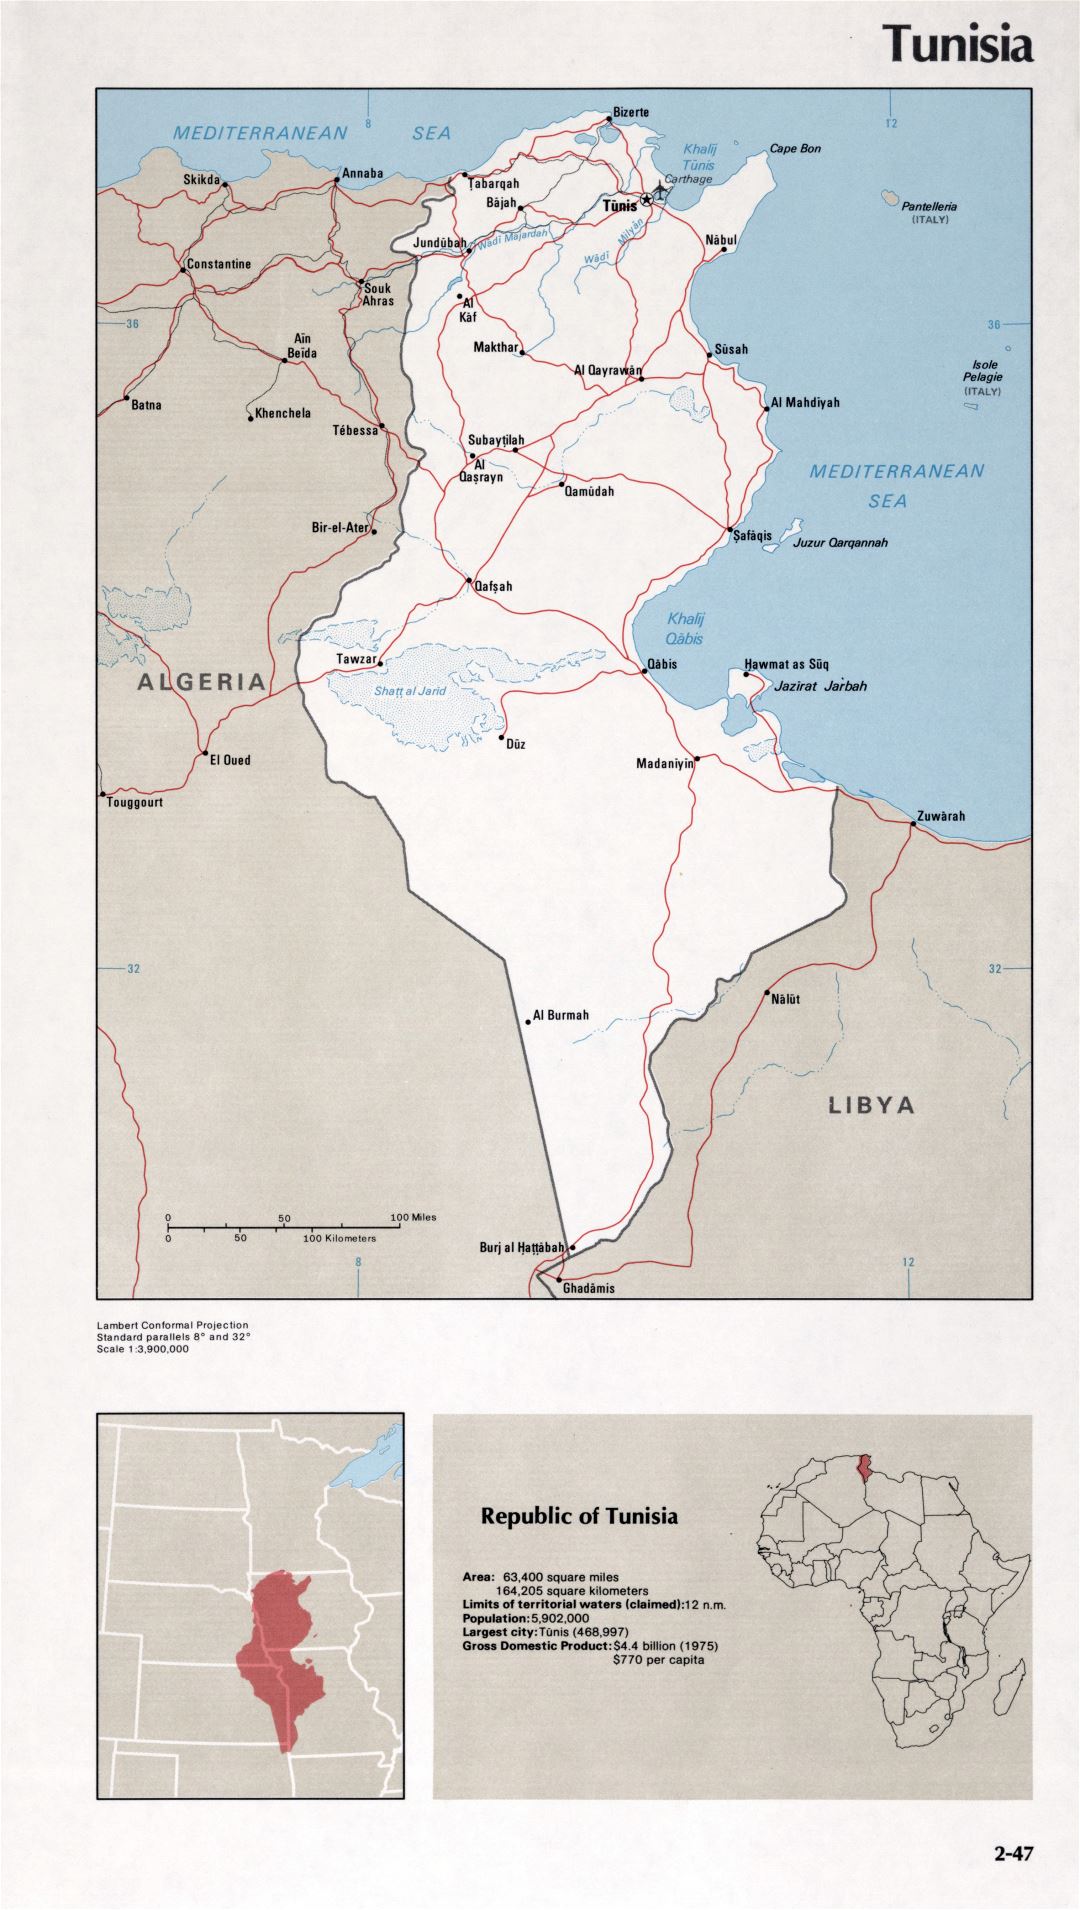 Map of Tunisia (2-47)